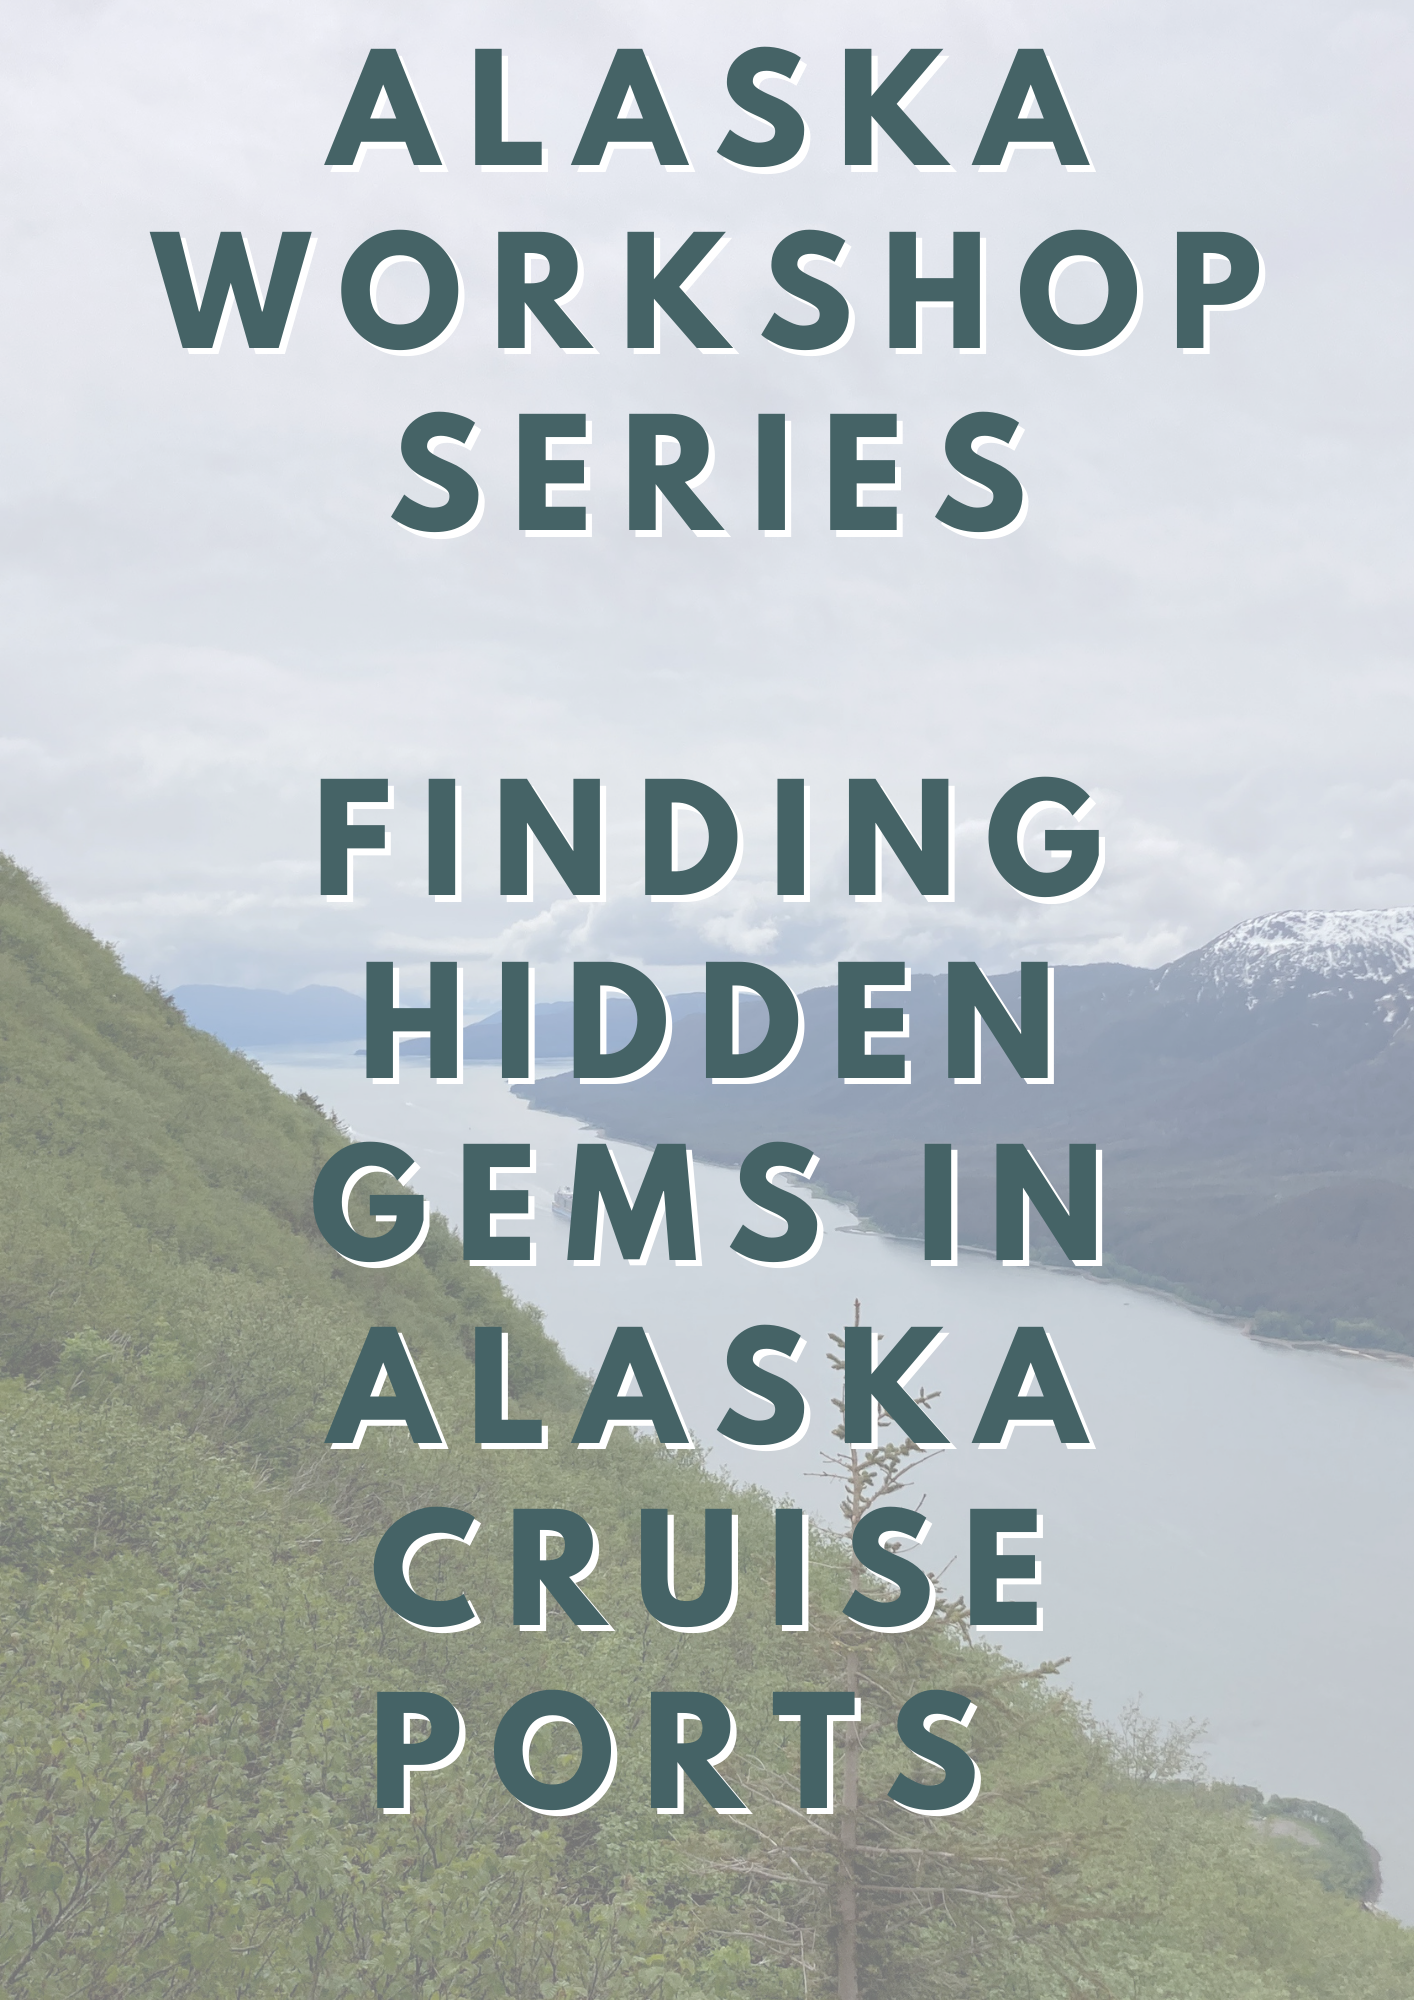 Alaska Workshop Series: Finding Hidden Gems in Alaska's Cruise Ports